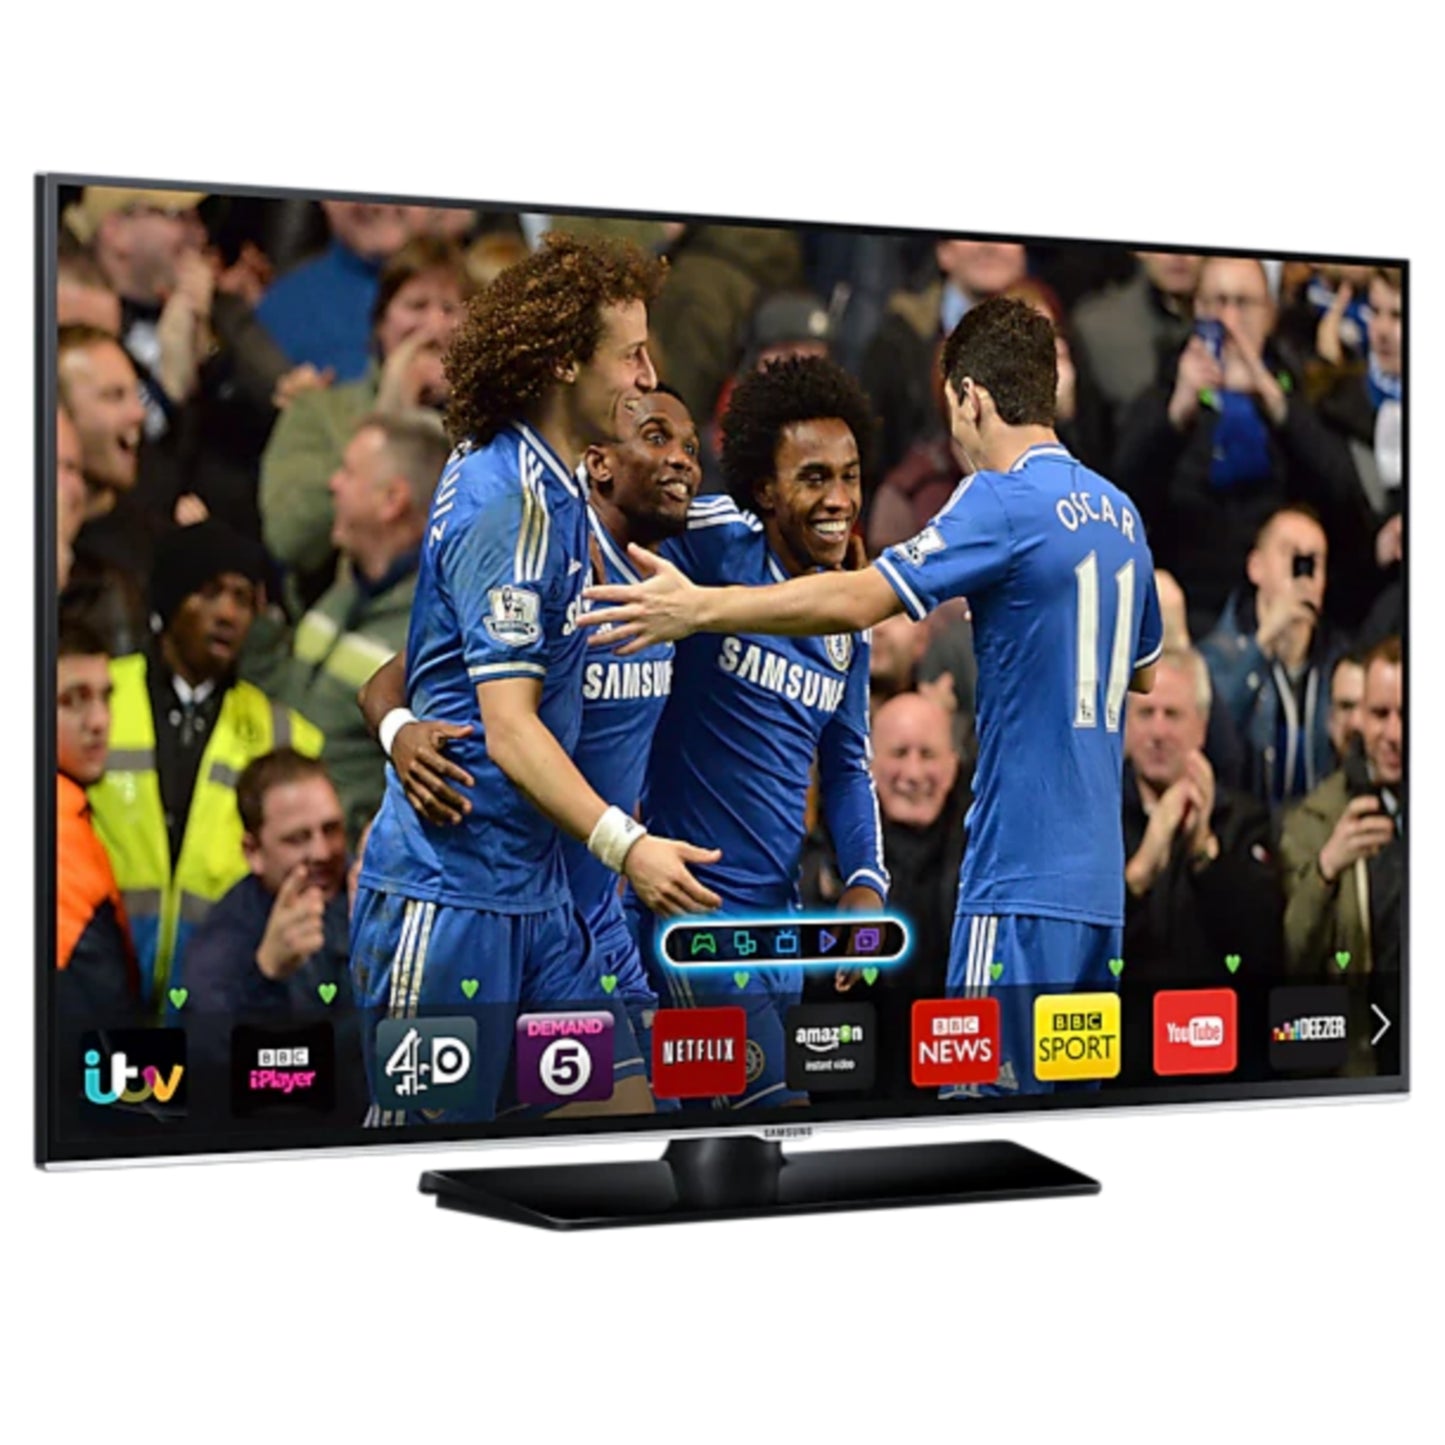 SAMSUNG 40 Inch UE40H5500 Series 5 Smart Full HD LED TV - UK Used